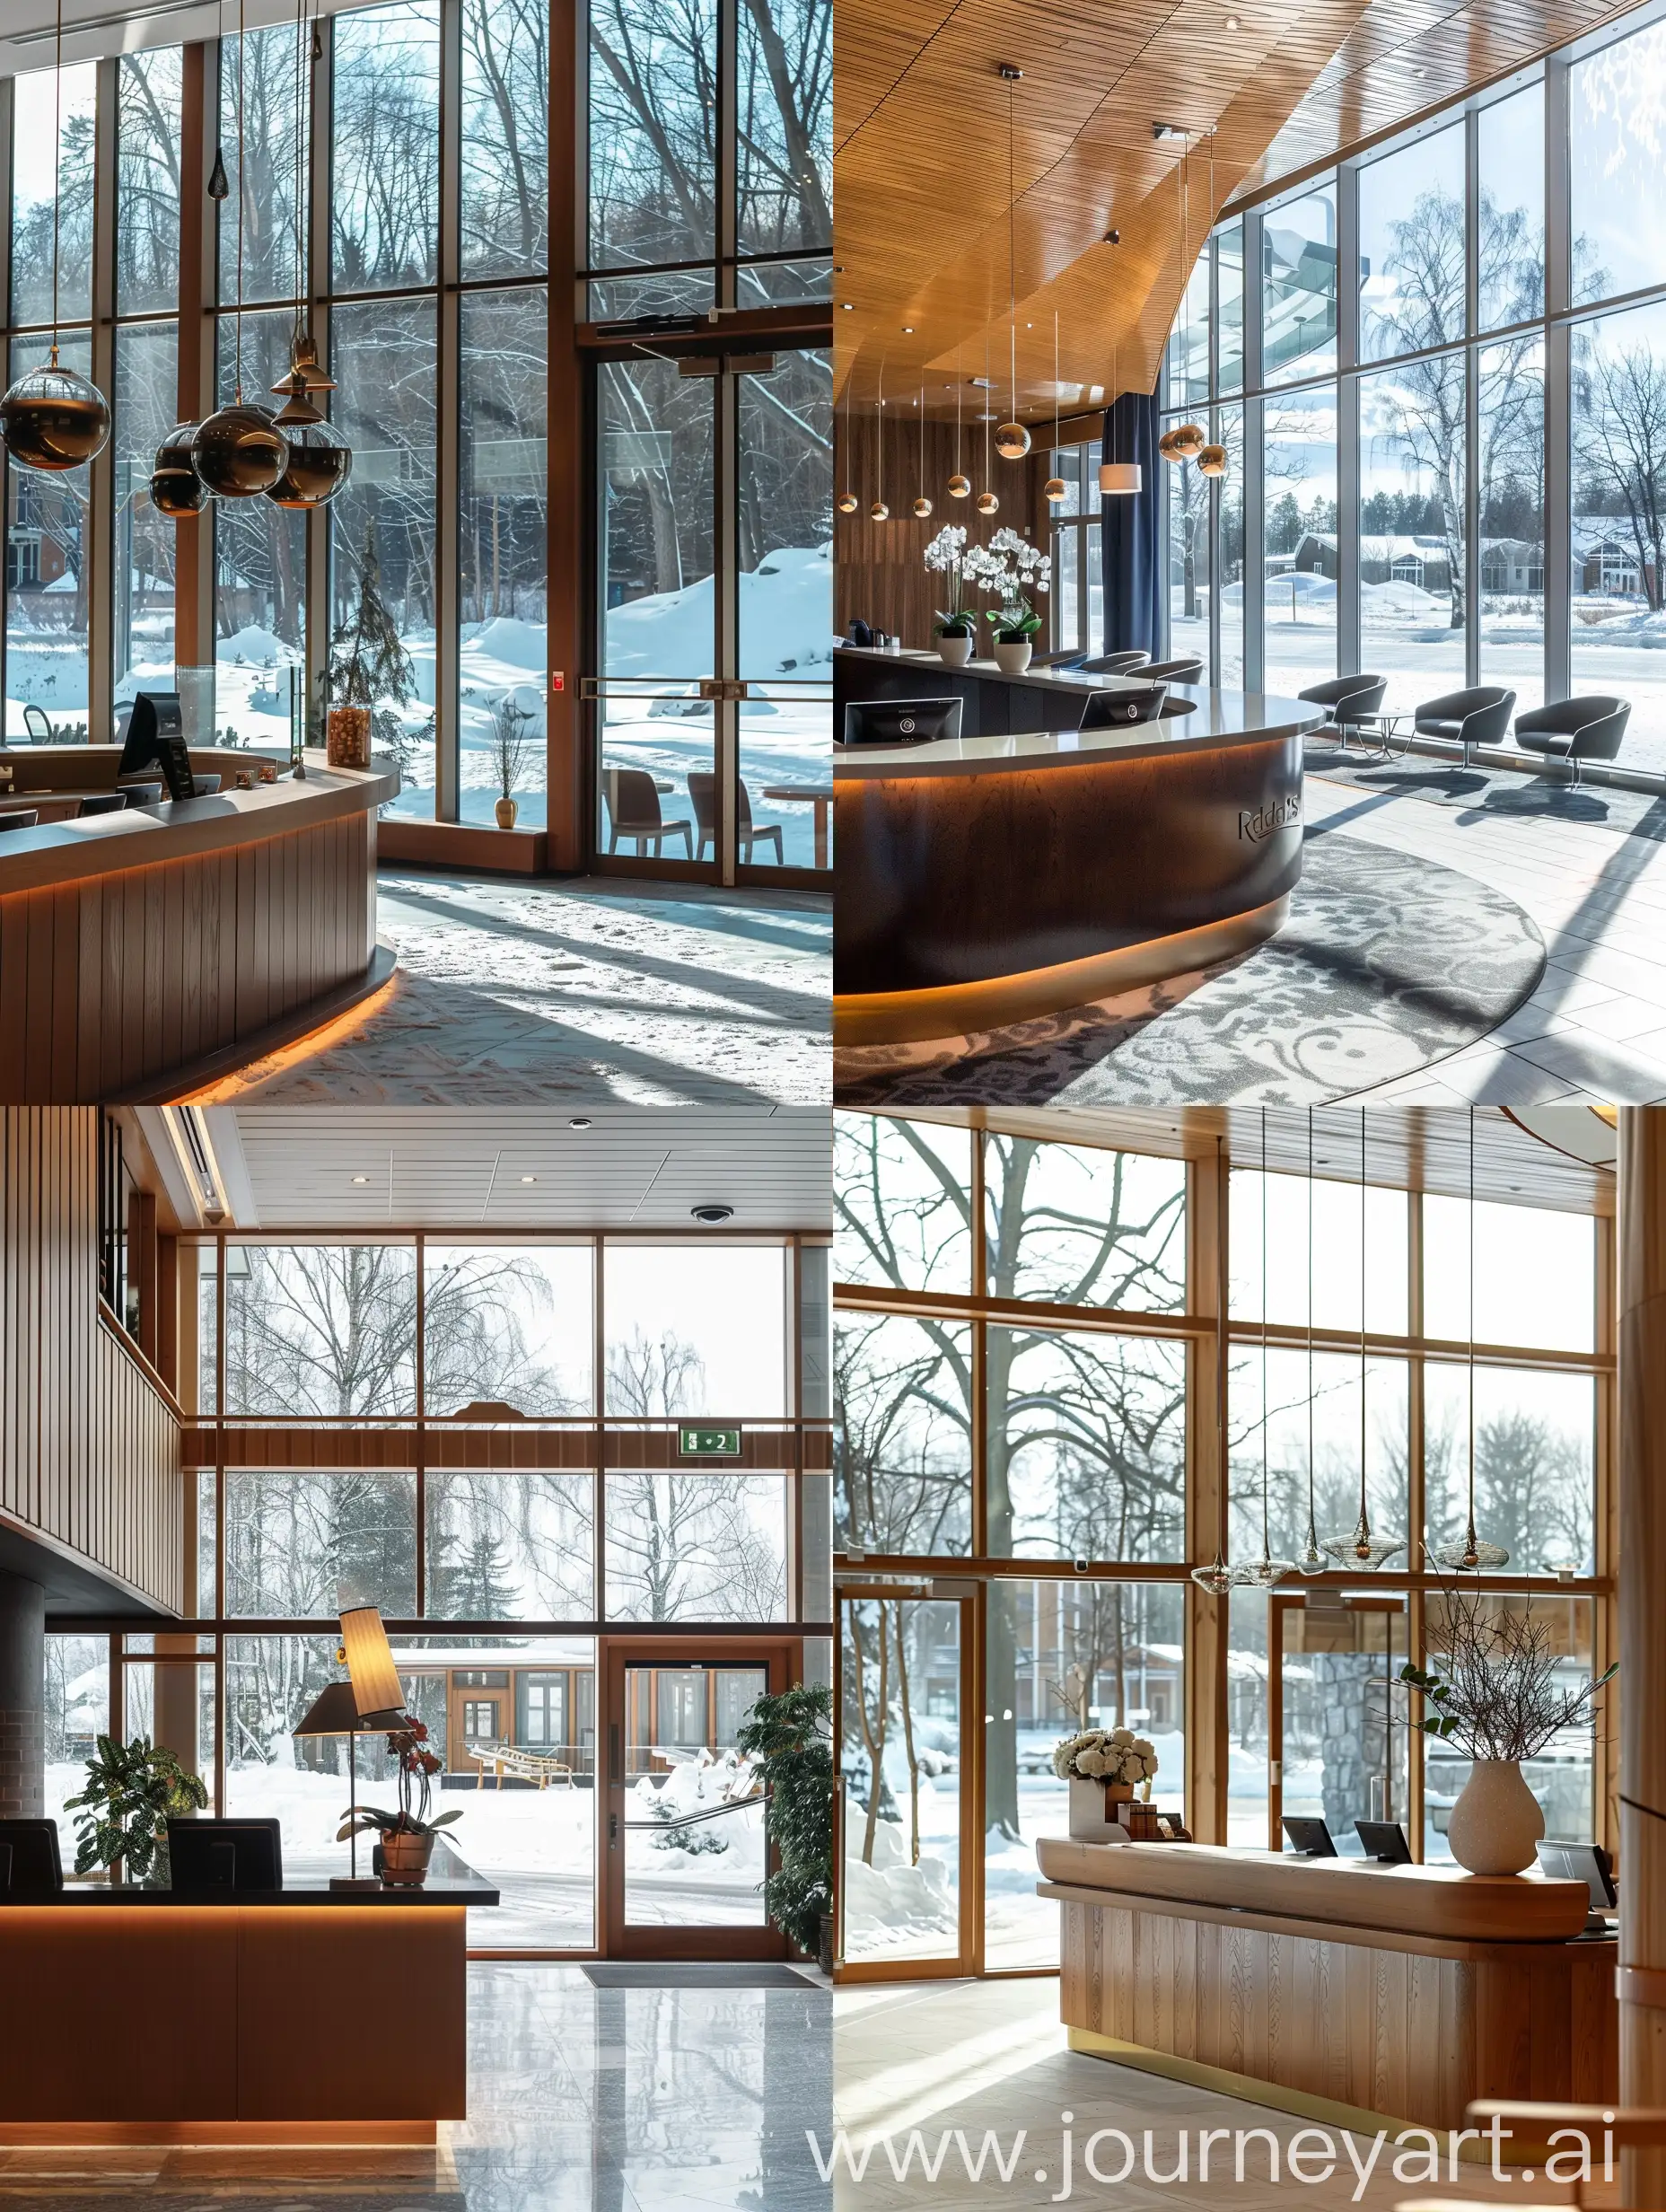 Radisson resort Hotel scandic style interior, reception desk, big windows, winter outside